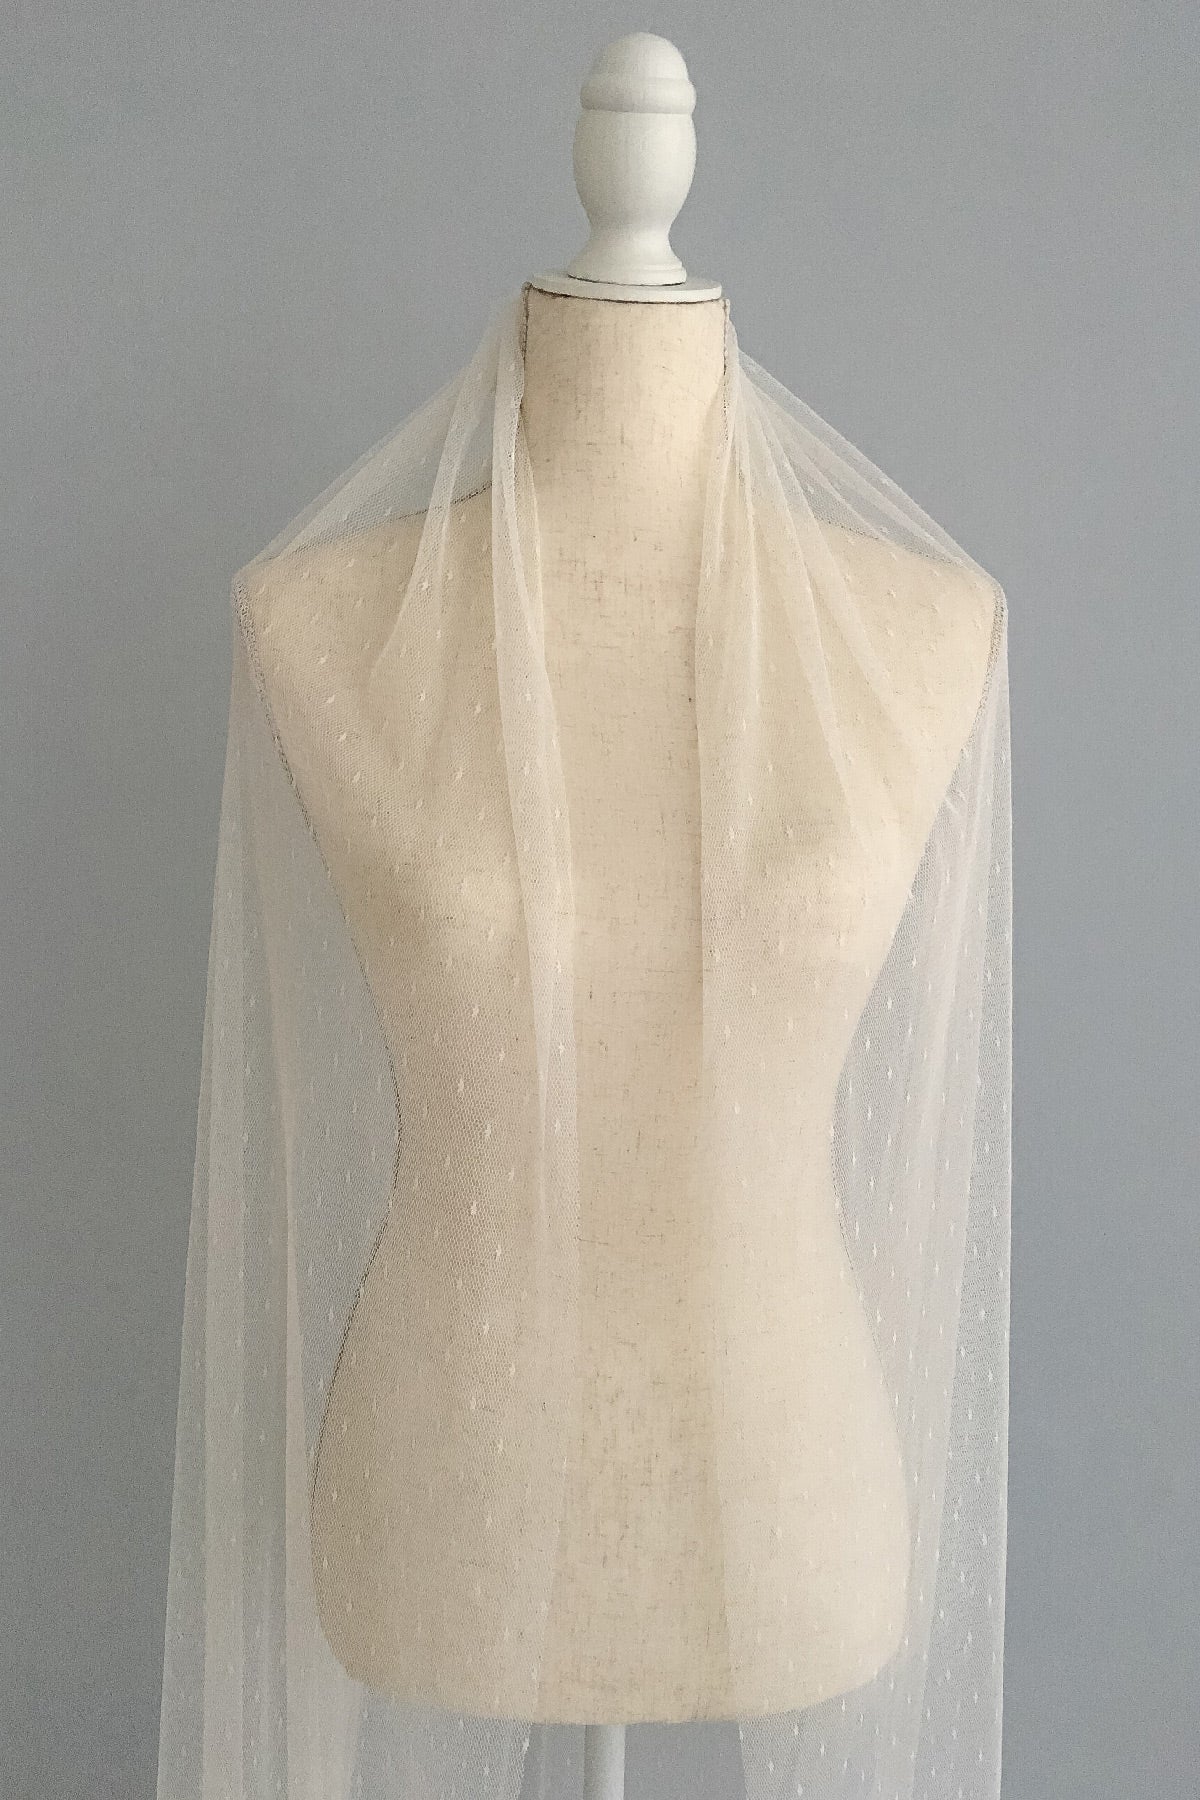 Polka dot wedding veil